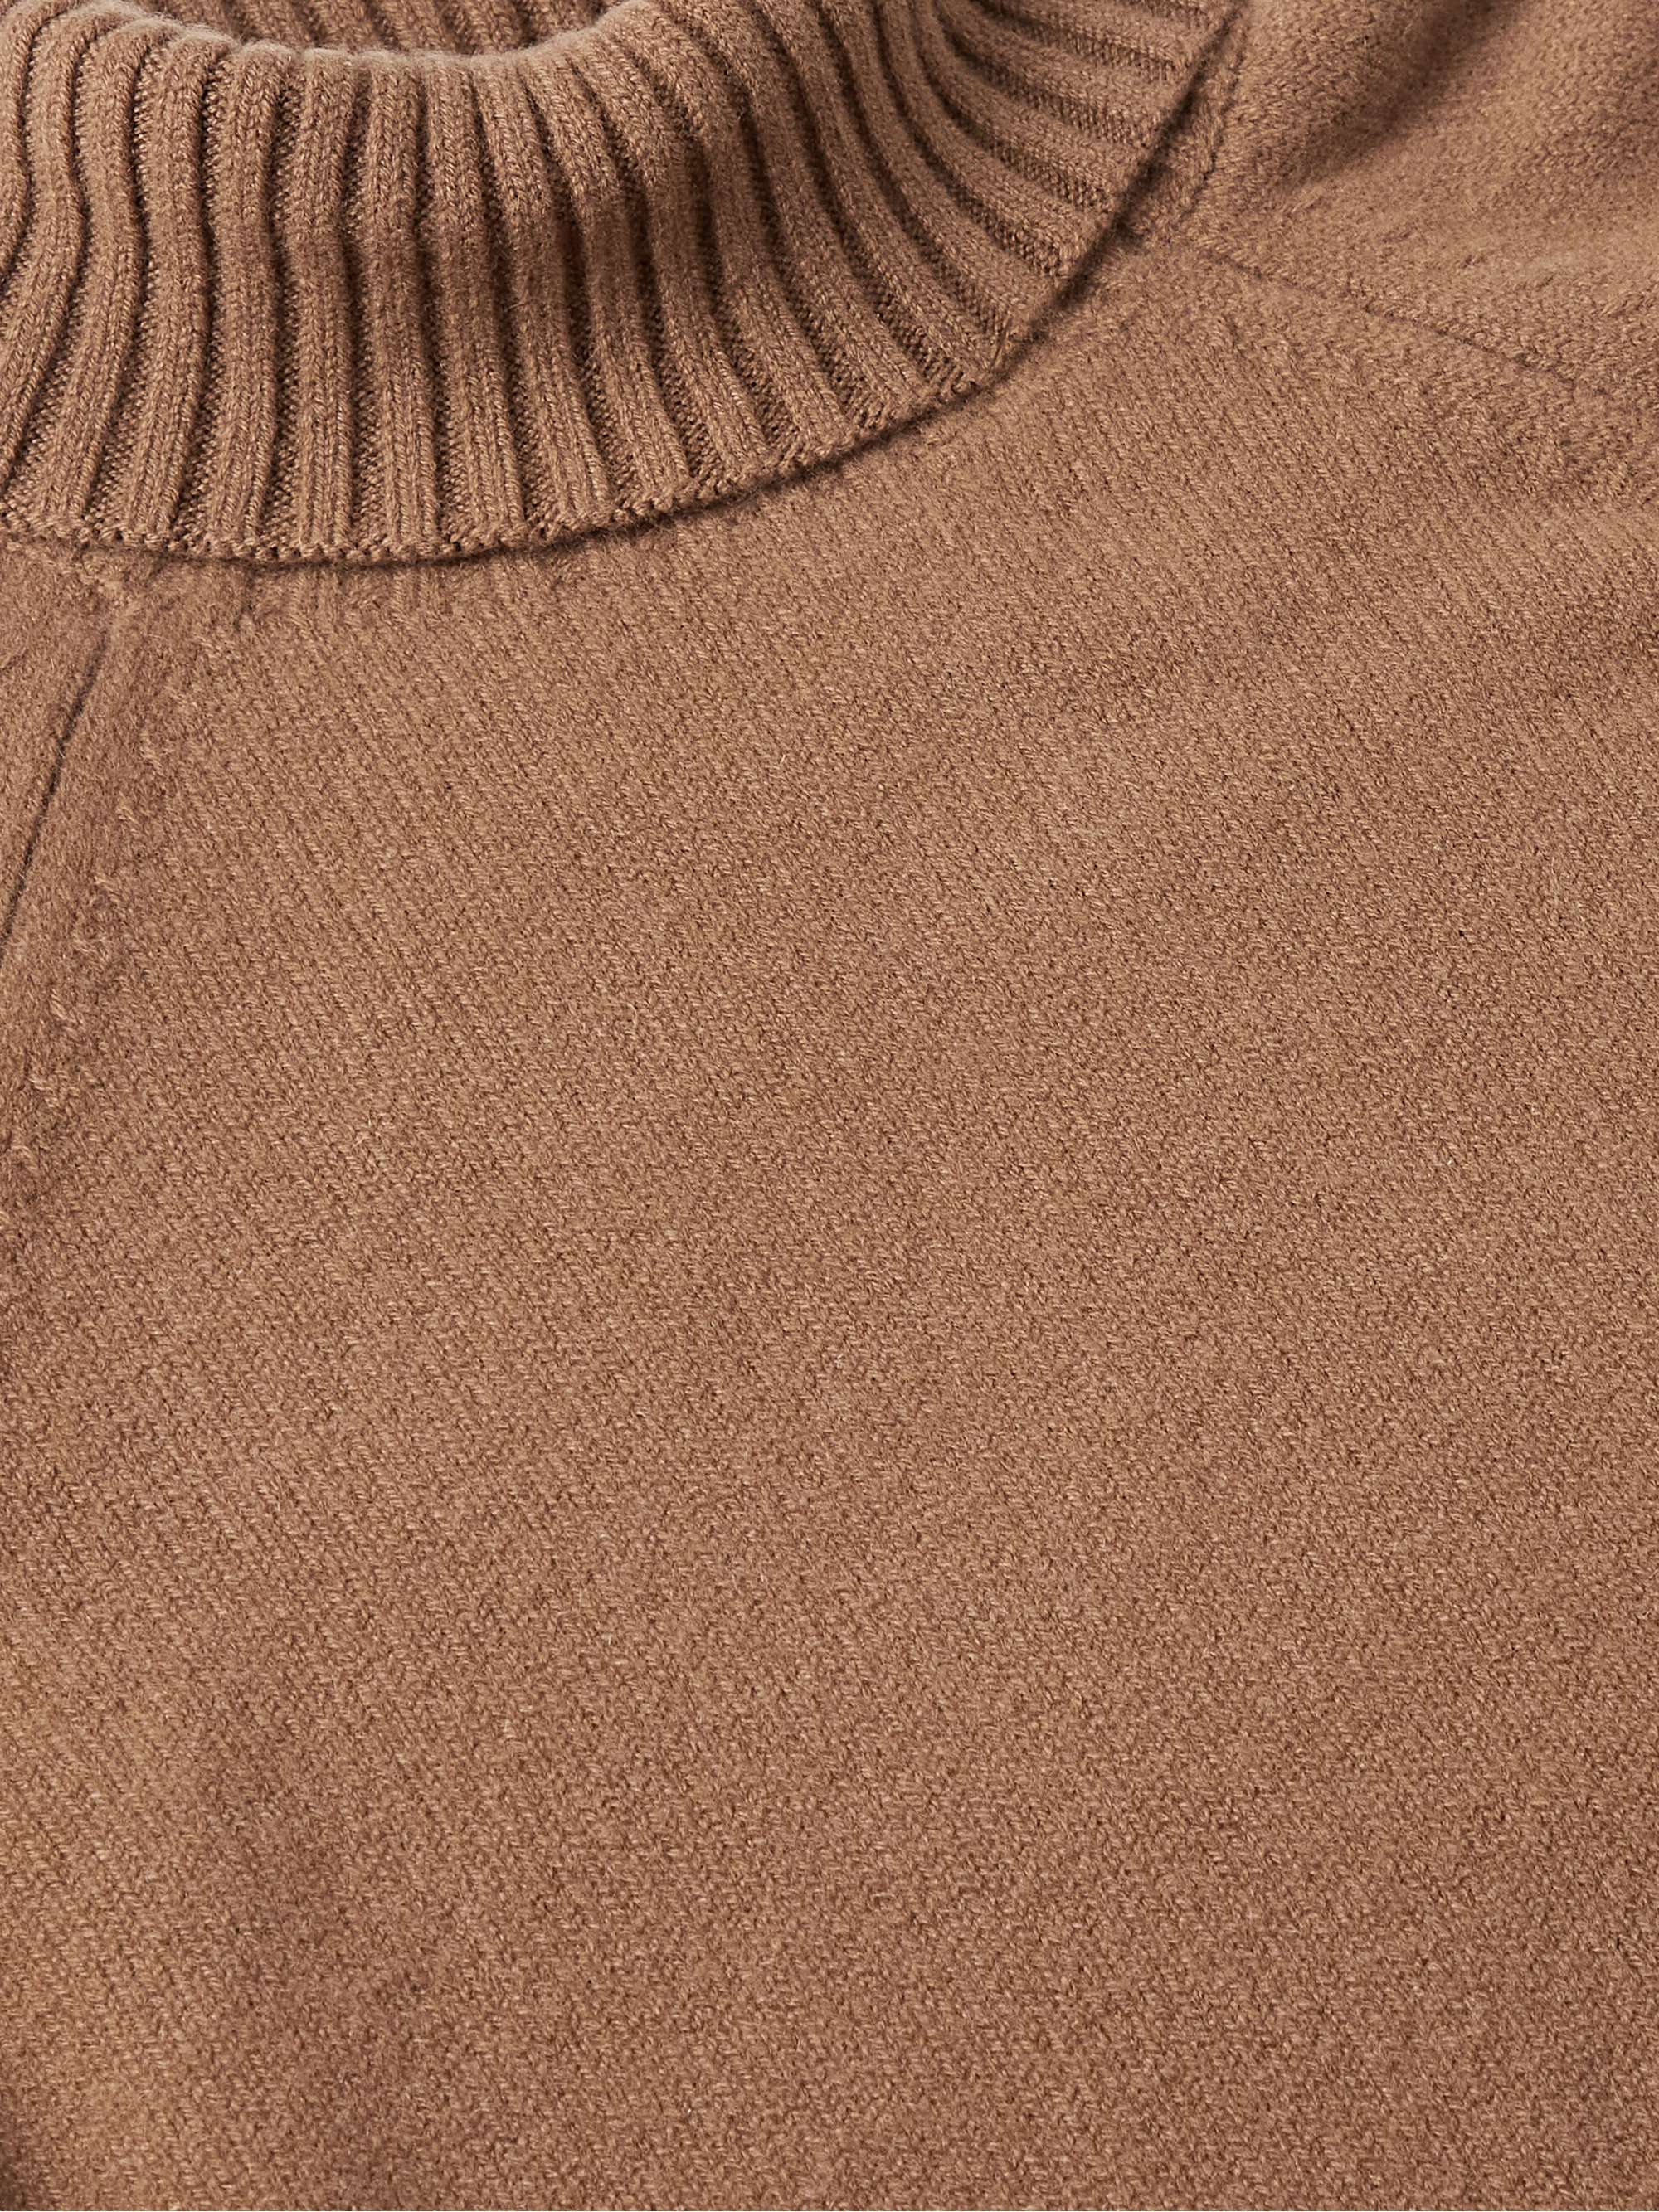 TOM FORD Cashmere-Blend Rollneck Sweater